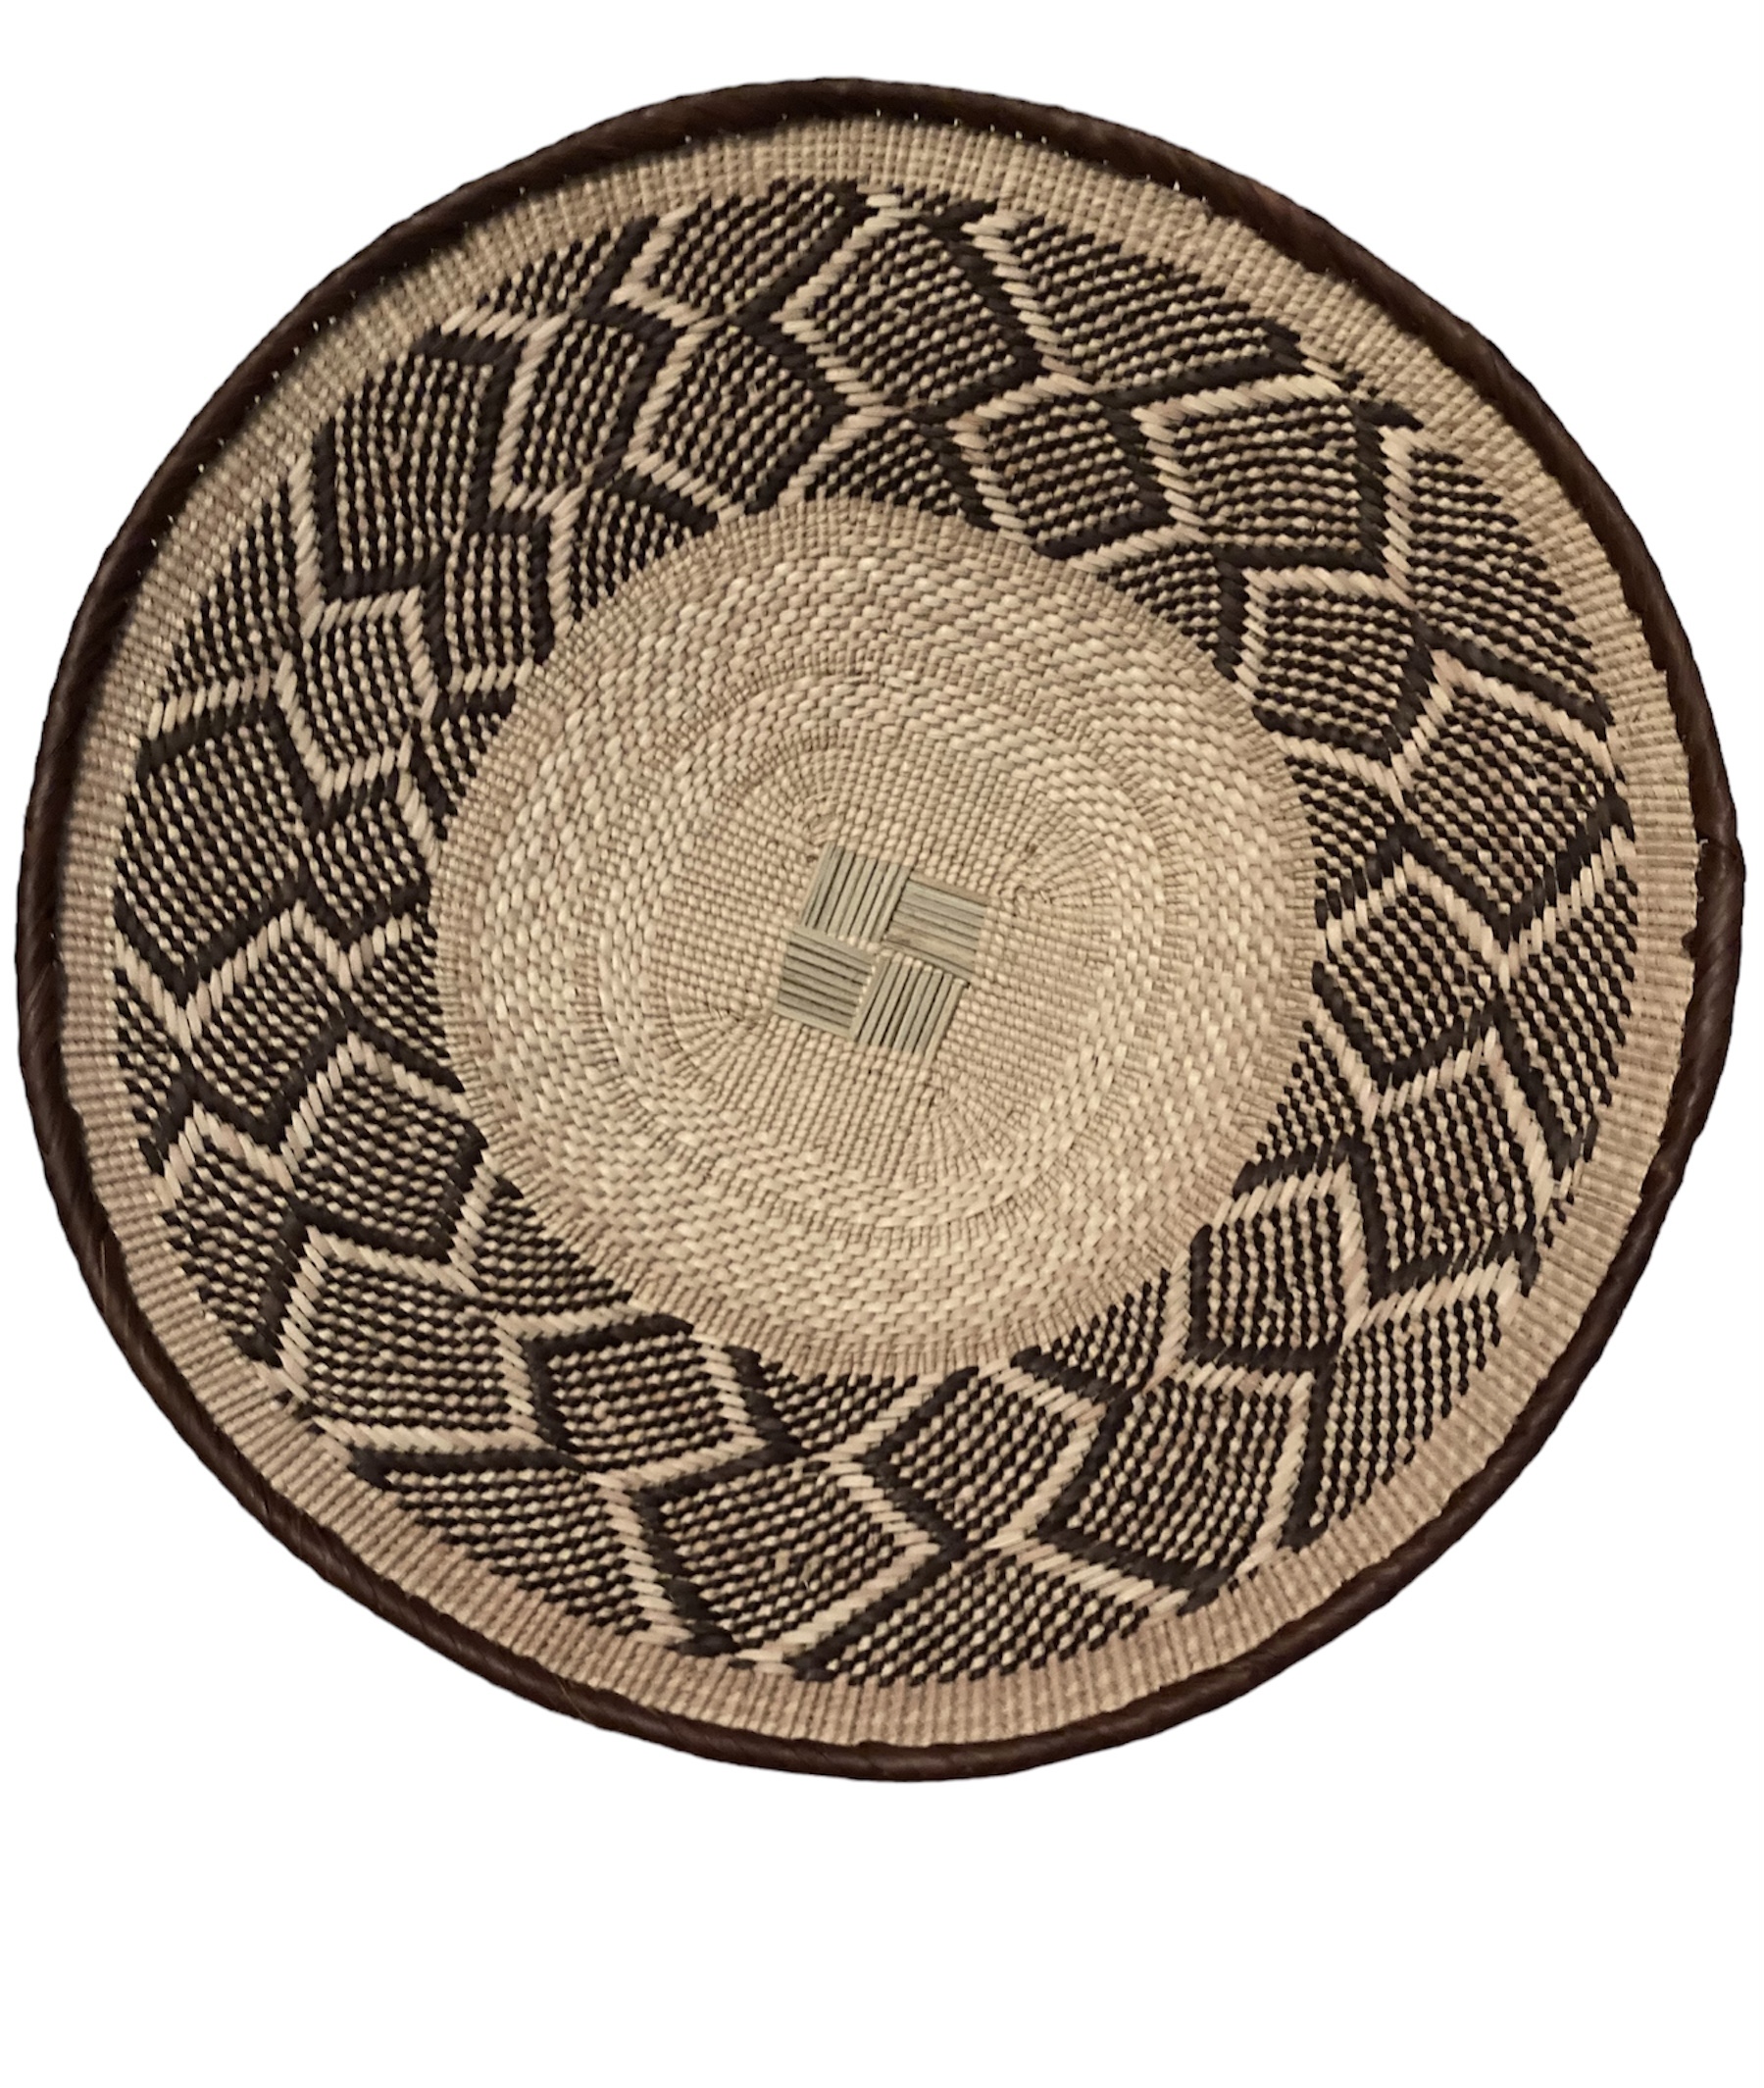 Tonga Basket from Zimbabwe - Design #008 - 15 /12\" dia.